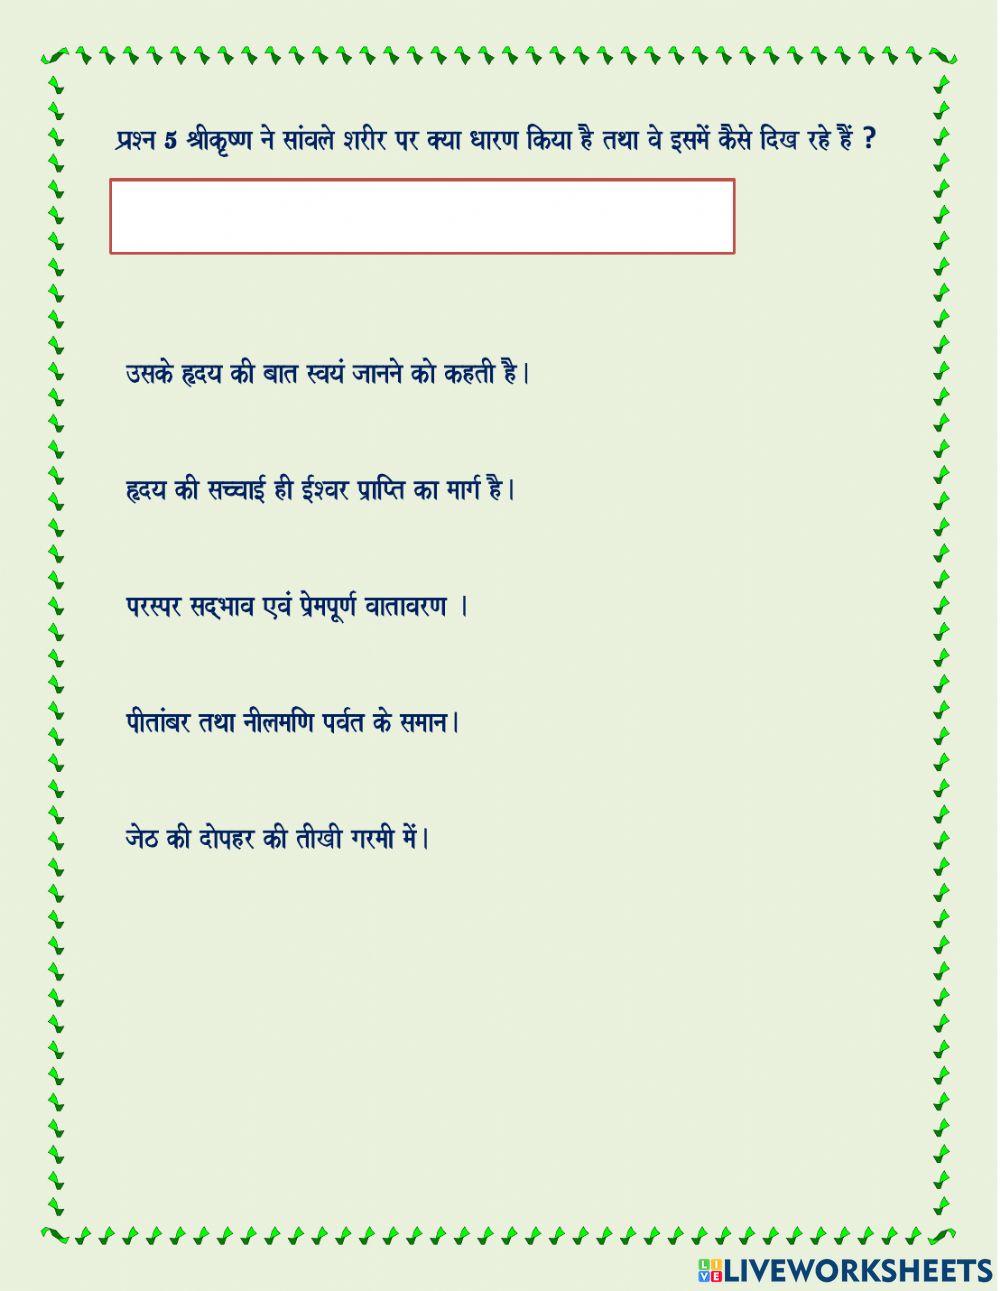 Hindi literature